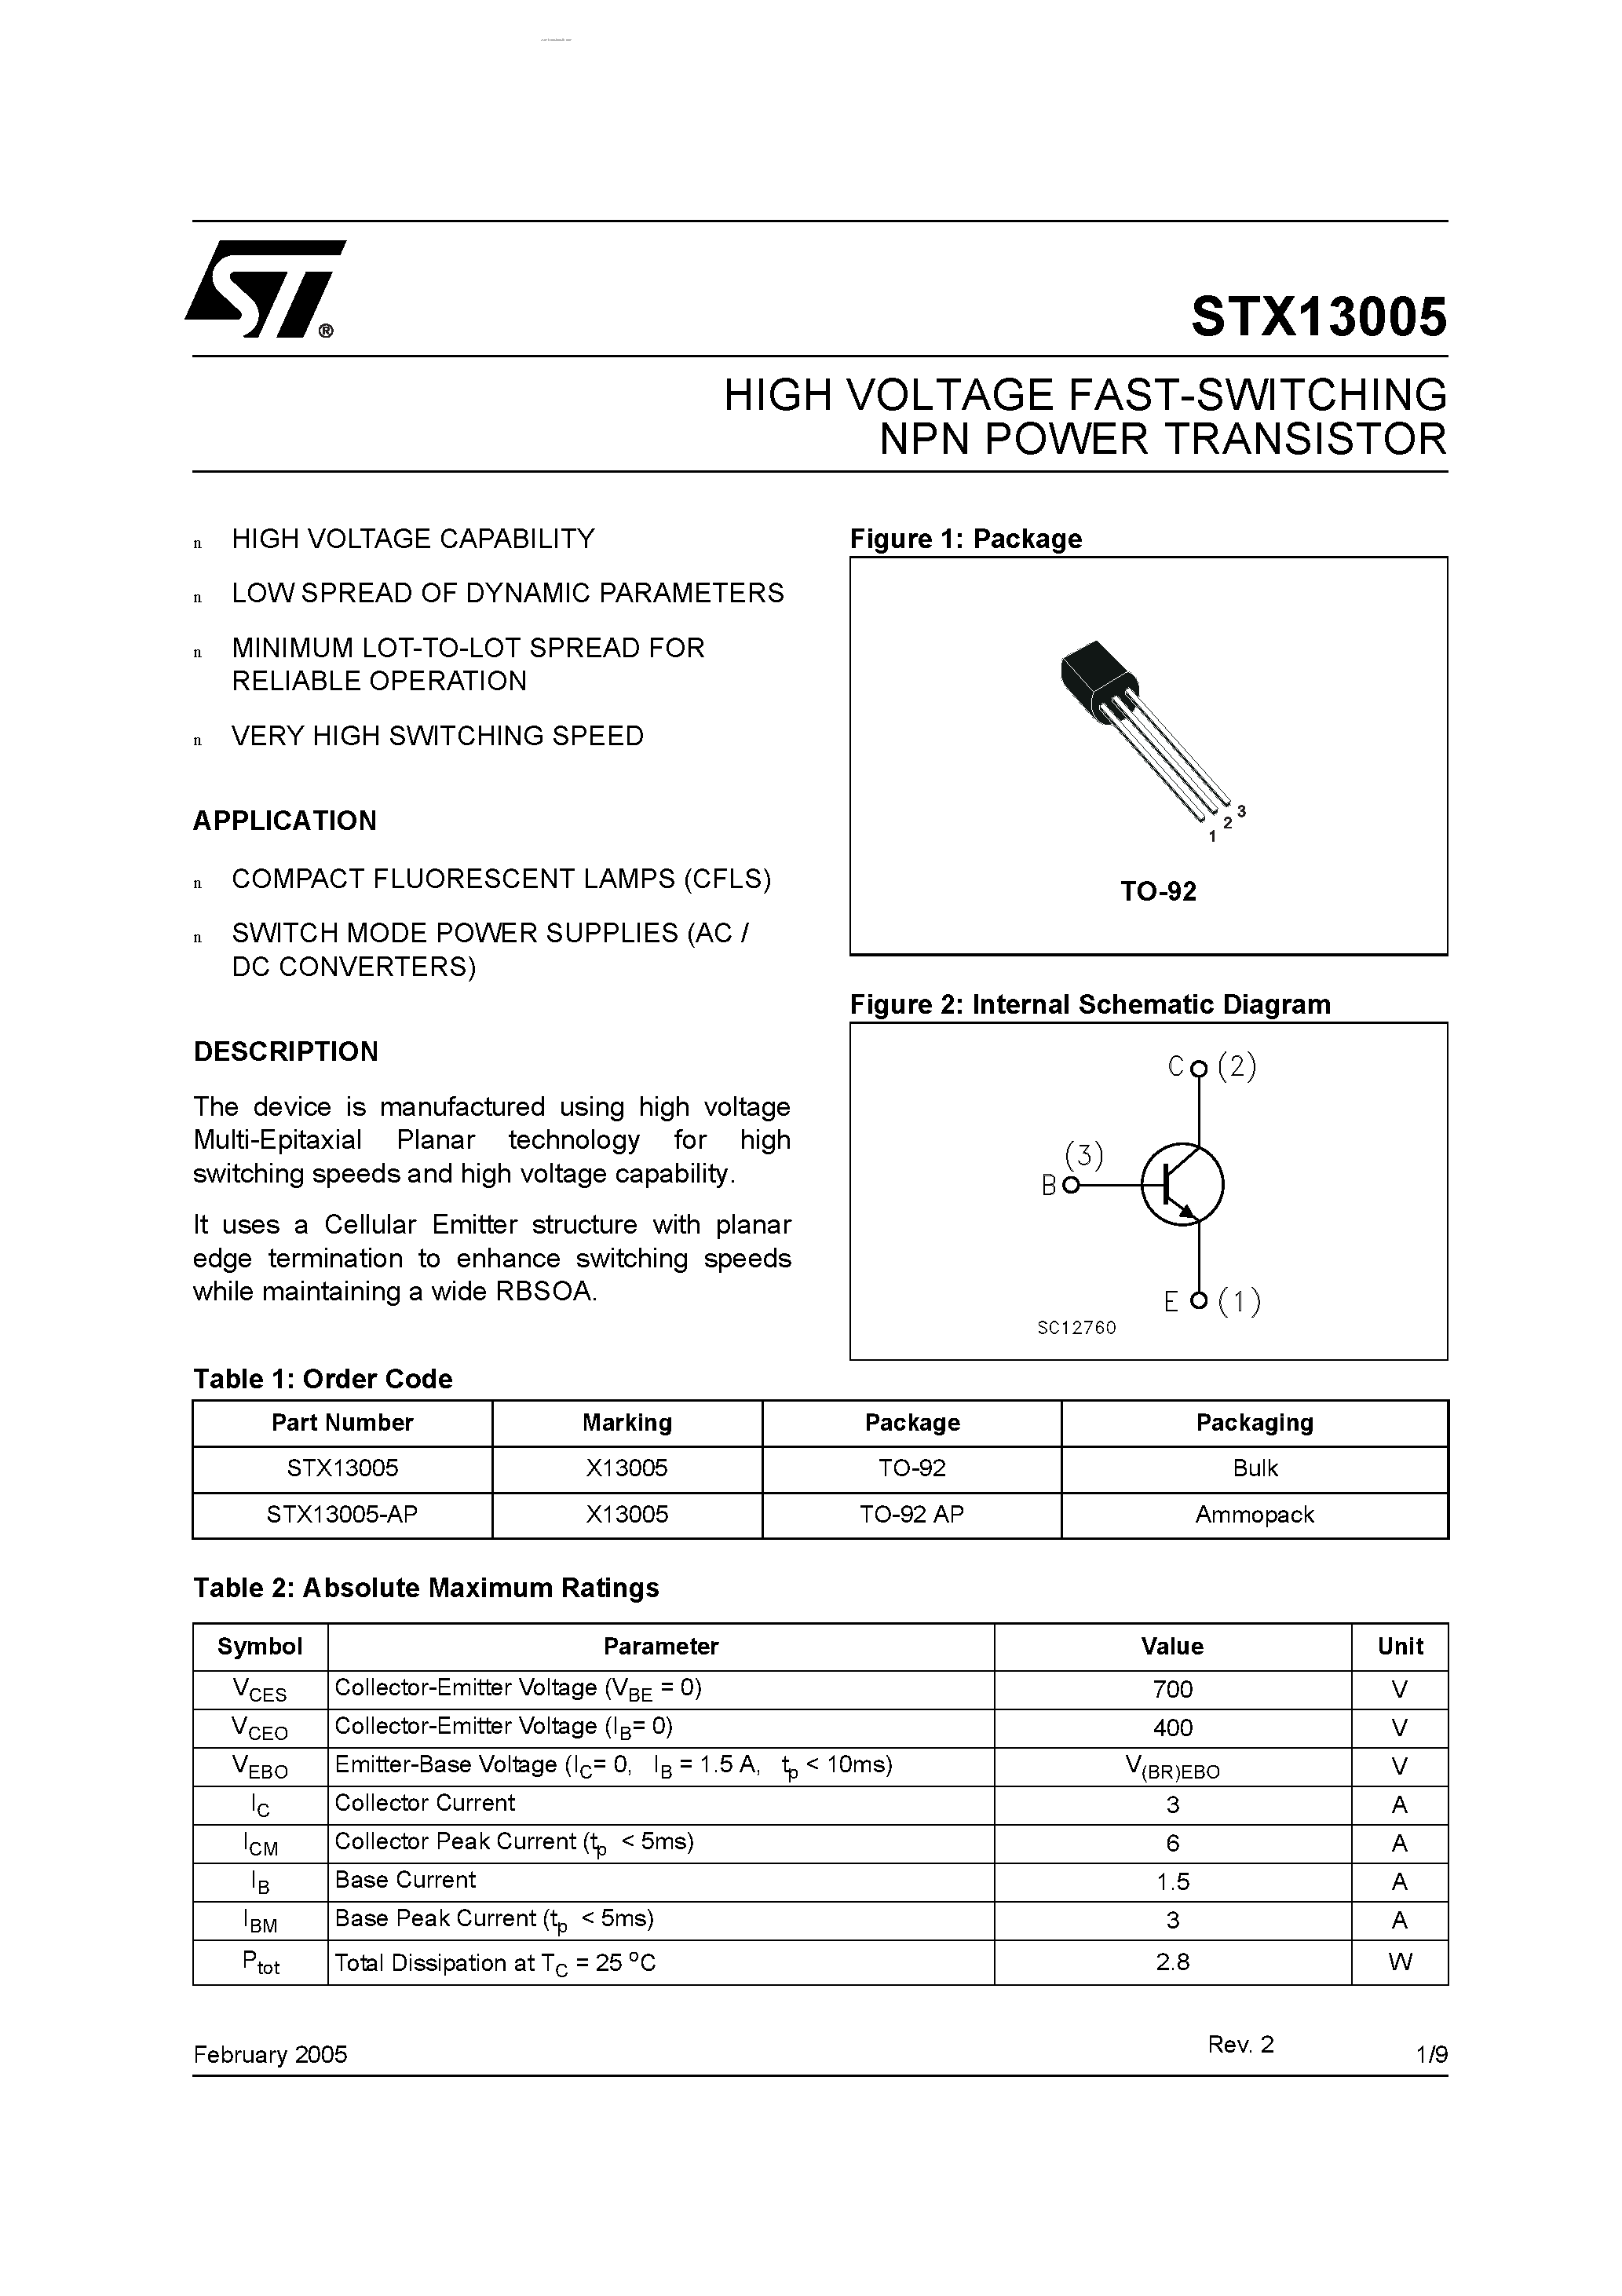 Datasheet STX13005 - HIGH VOLTAGE FAST-SWITCHING NPN POWER TRANSISTOR page 1